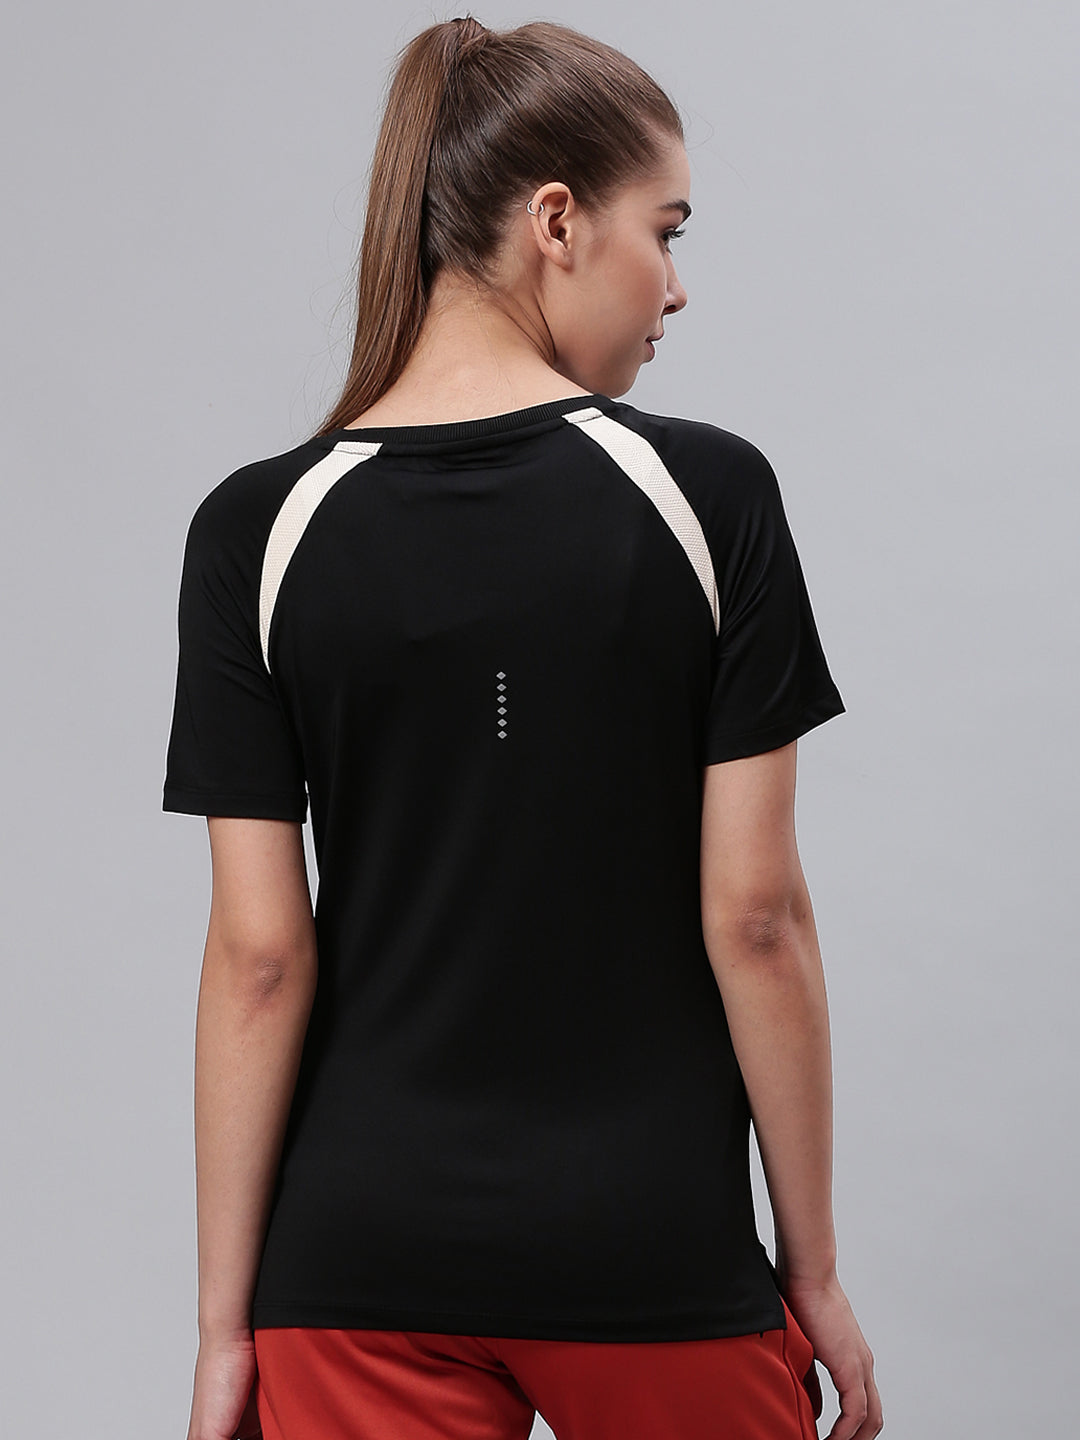 Alcis Women Black Slim Fit Solid Running T-shirt